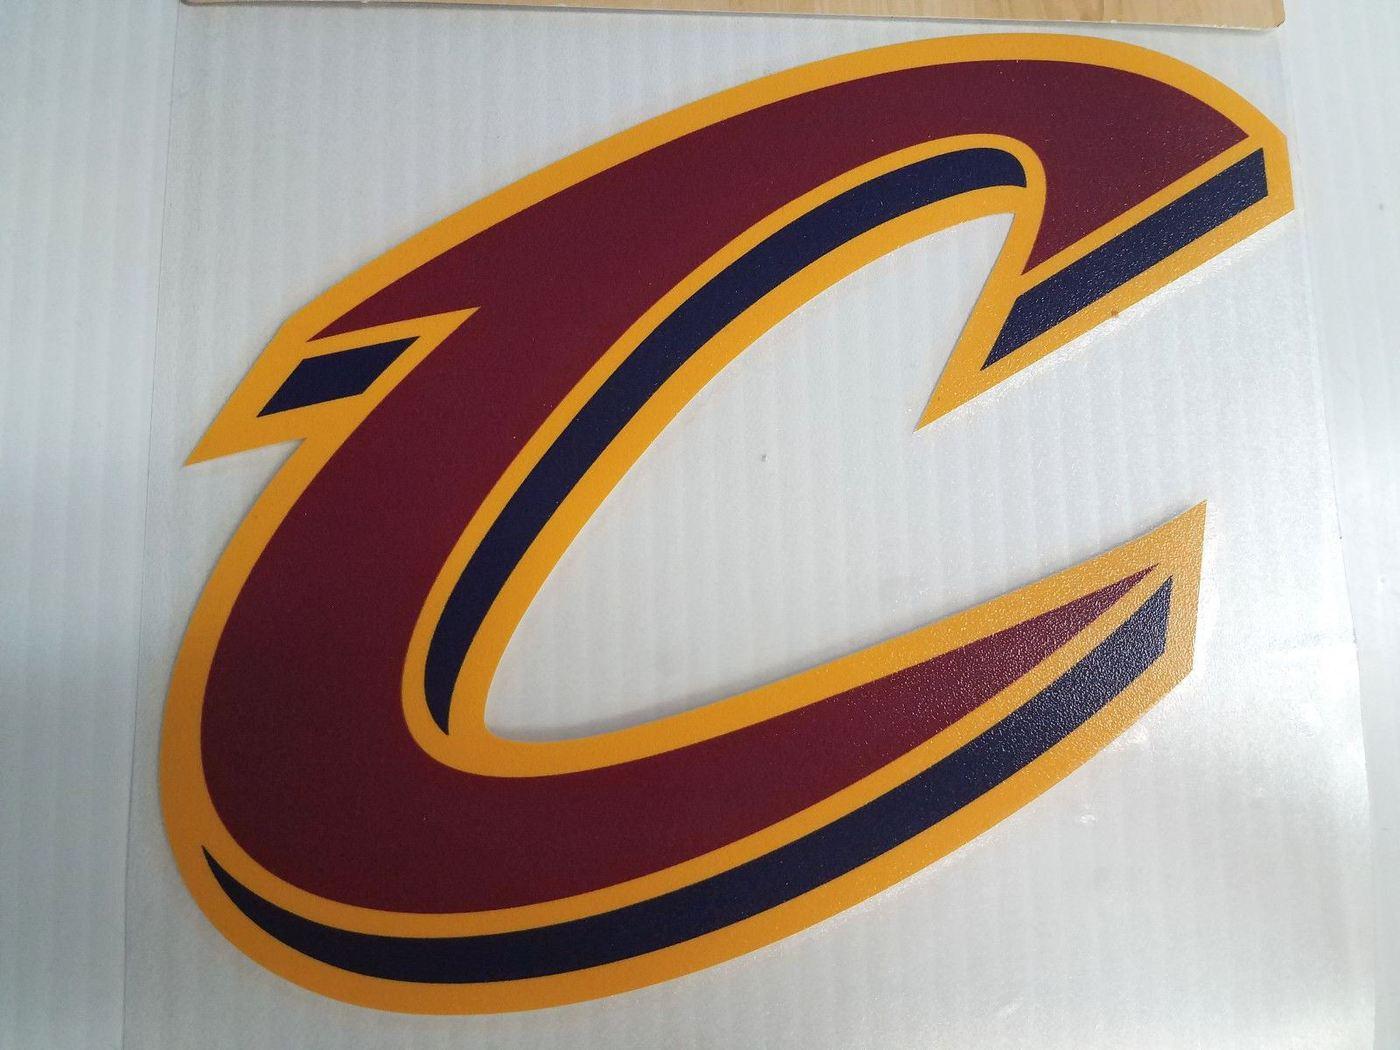 Cavs C Logo - Cleveland Cavaliers Colored C Window Die Cut Decal Wincraft Sticker ...